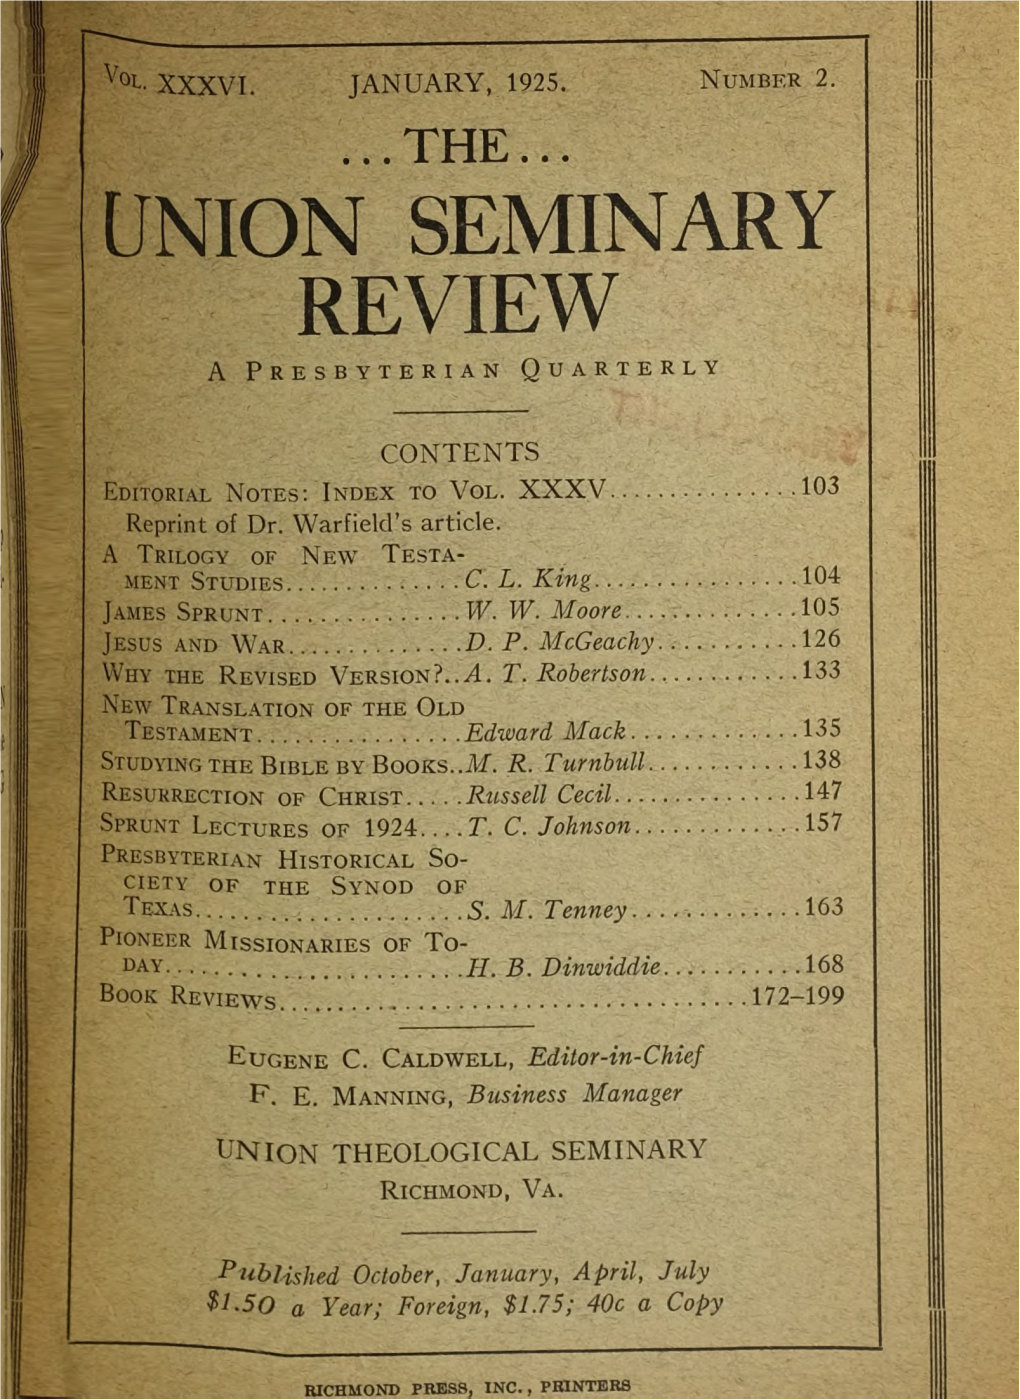 The Presbyterian Historical Society of the Synod of Texas